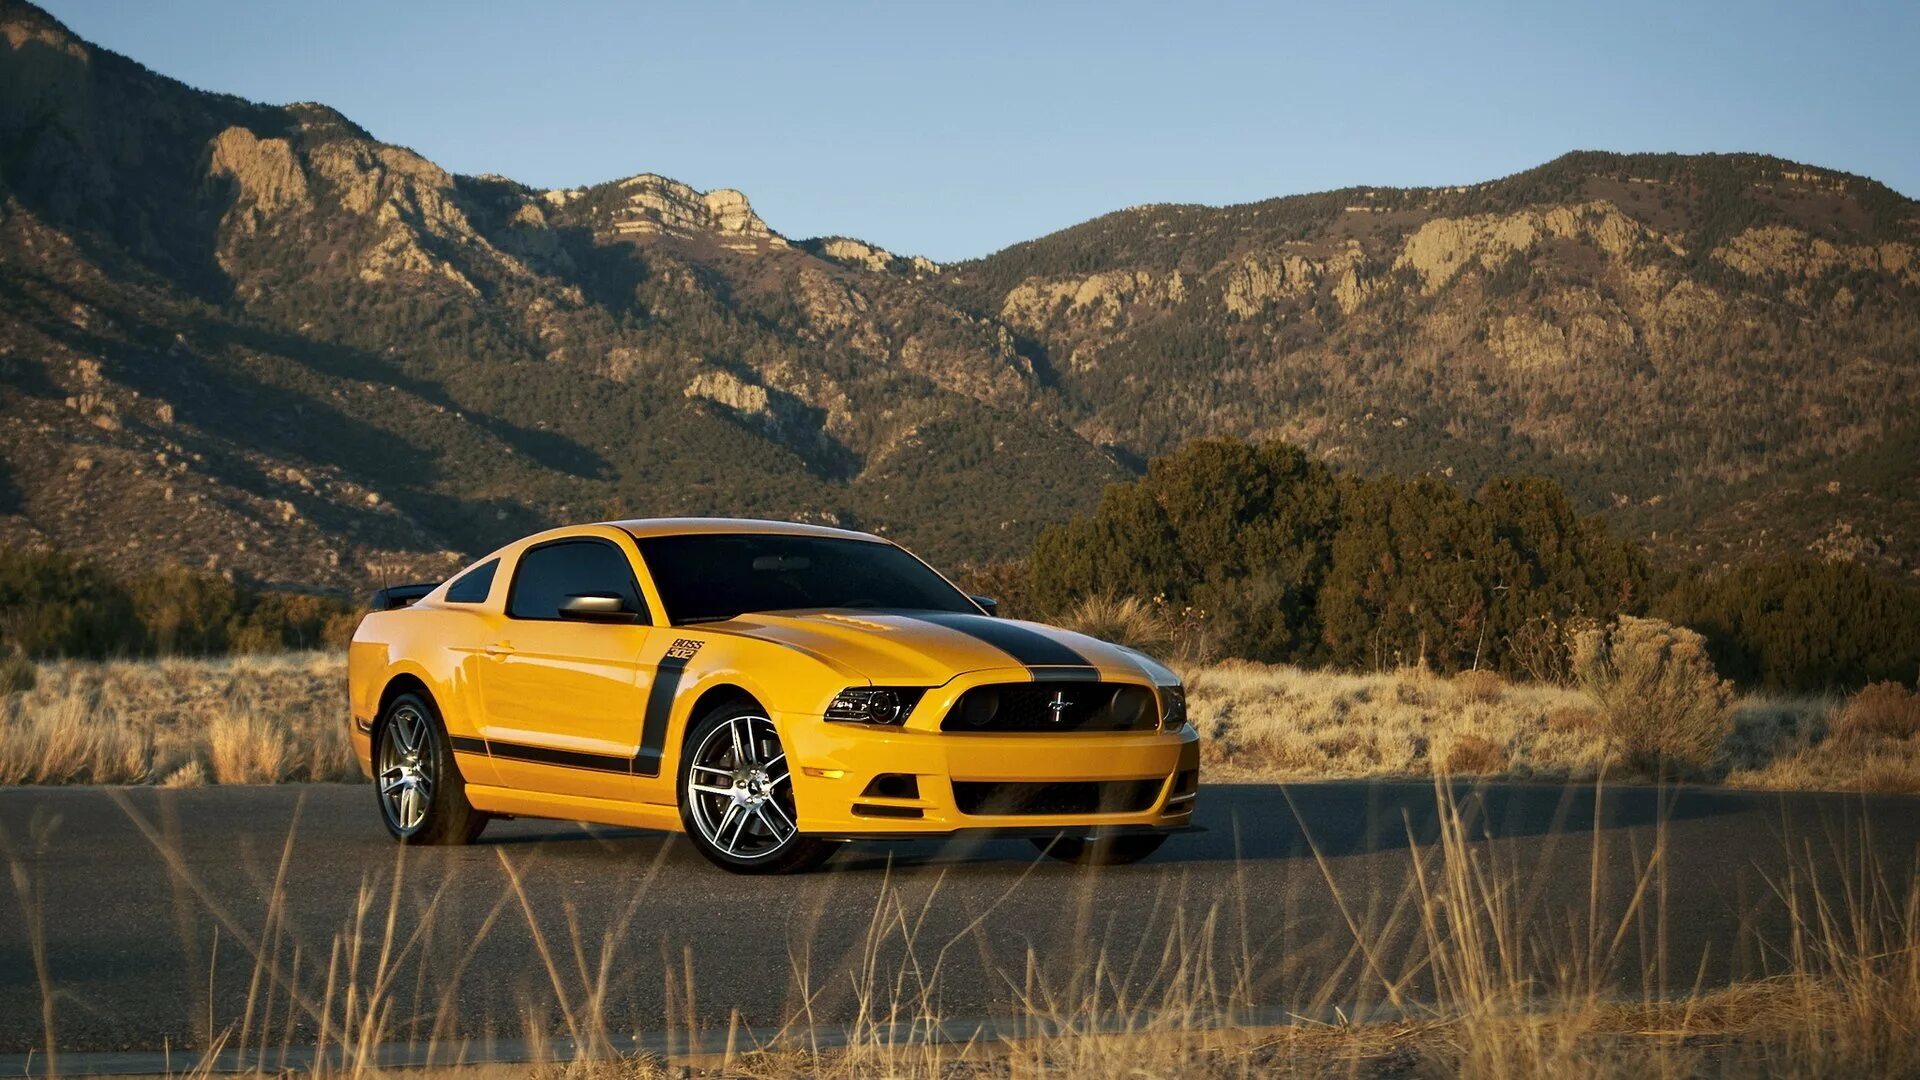 Форд Мустанг 2013 желтый. Ford Mustang Boss 302. Ford Mustang Boss. Ford Mustang 2013. Машины без авторских прав